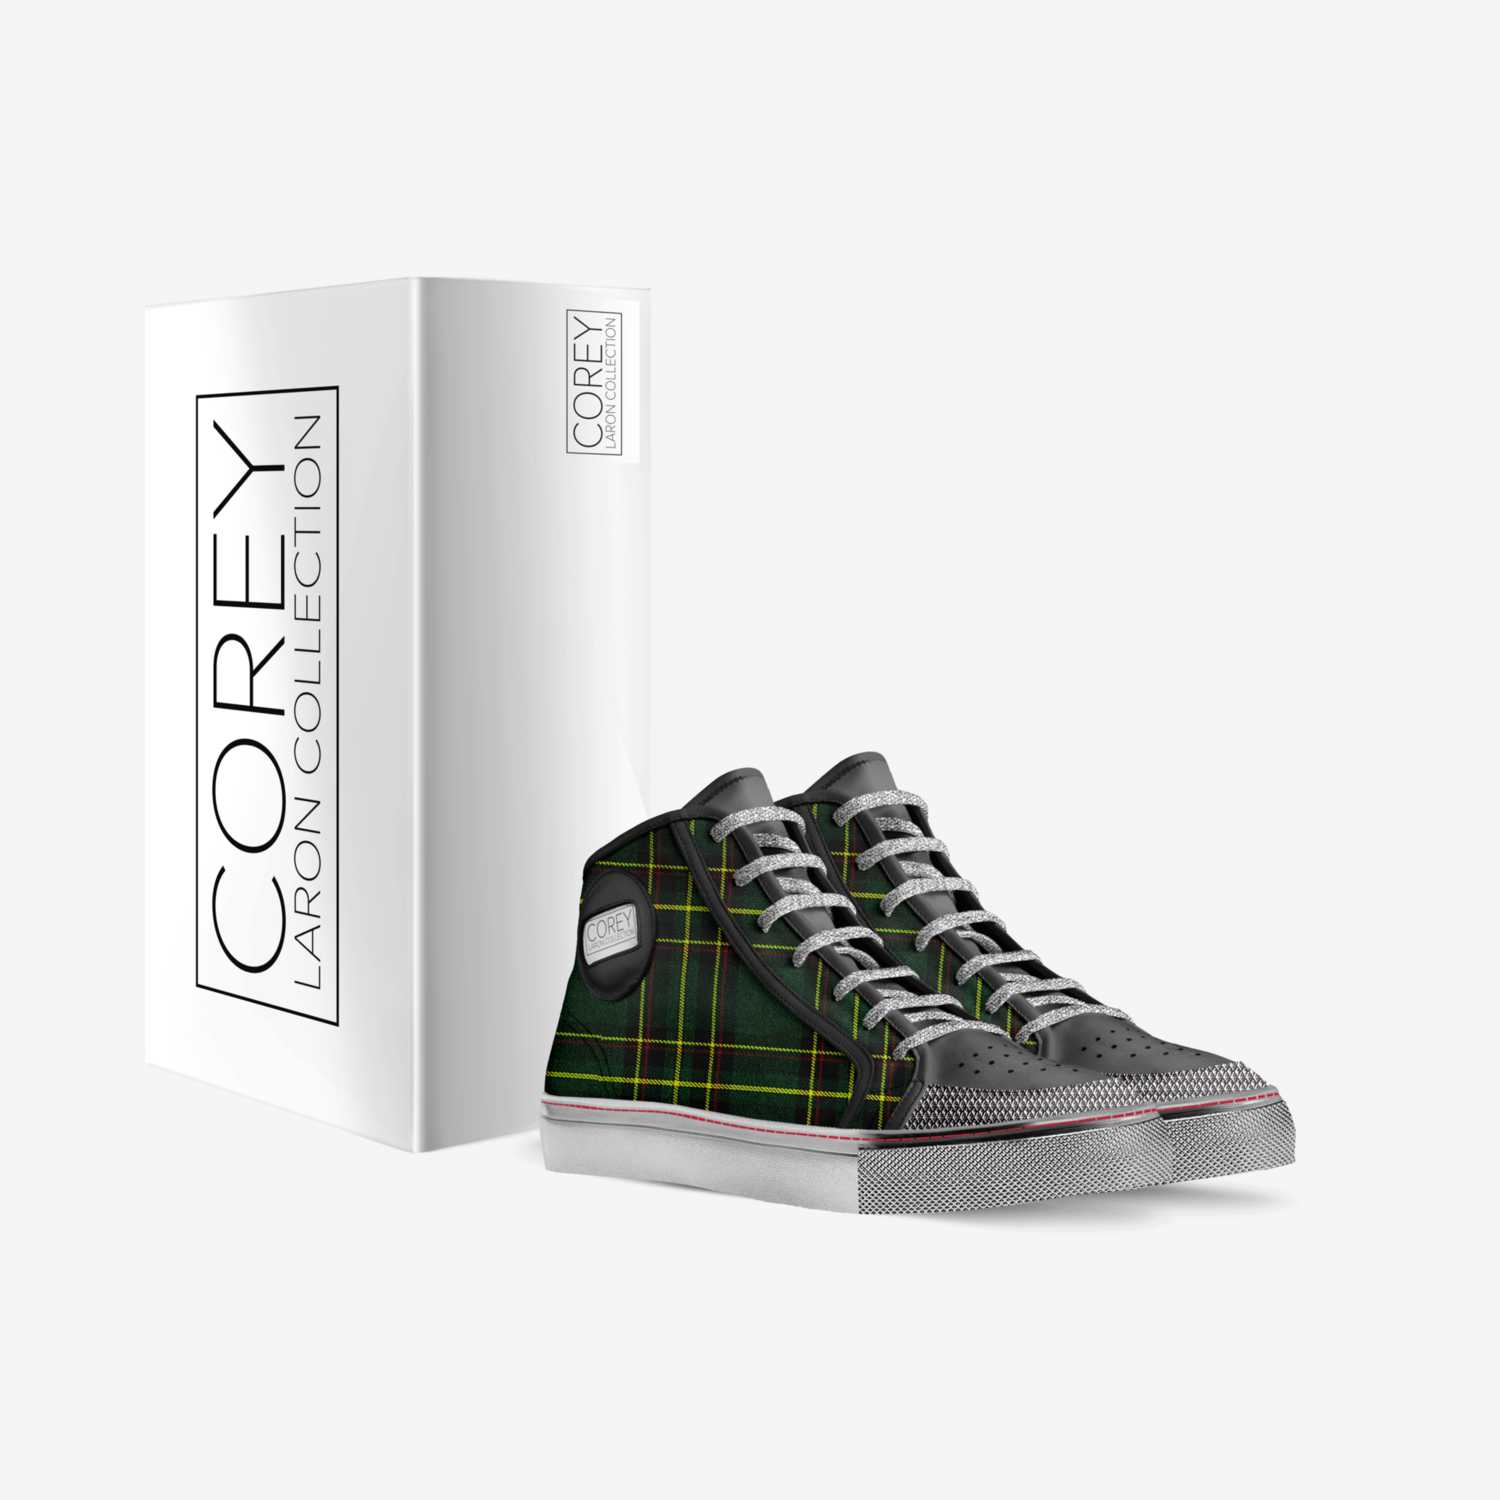 Corey Laron 8 custom made in Italy shoes by Corey Laron Hoskins Jr | Box view